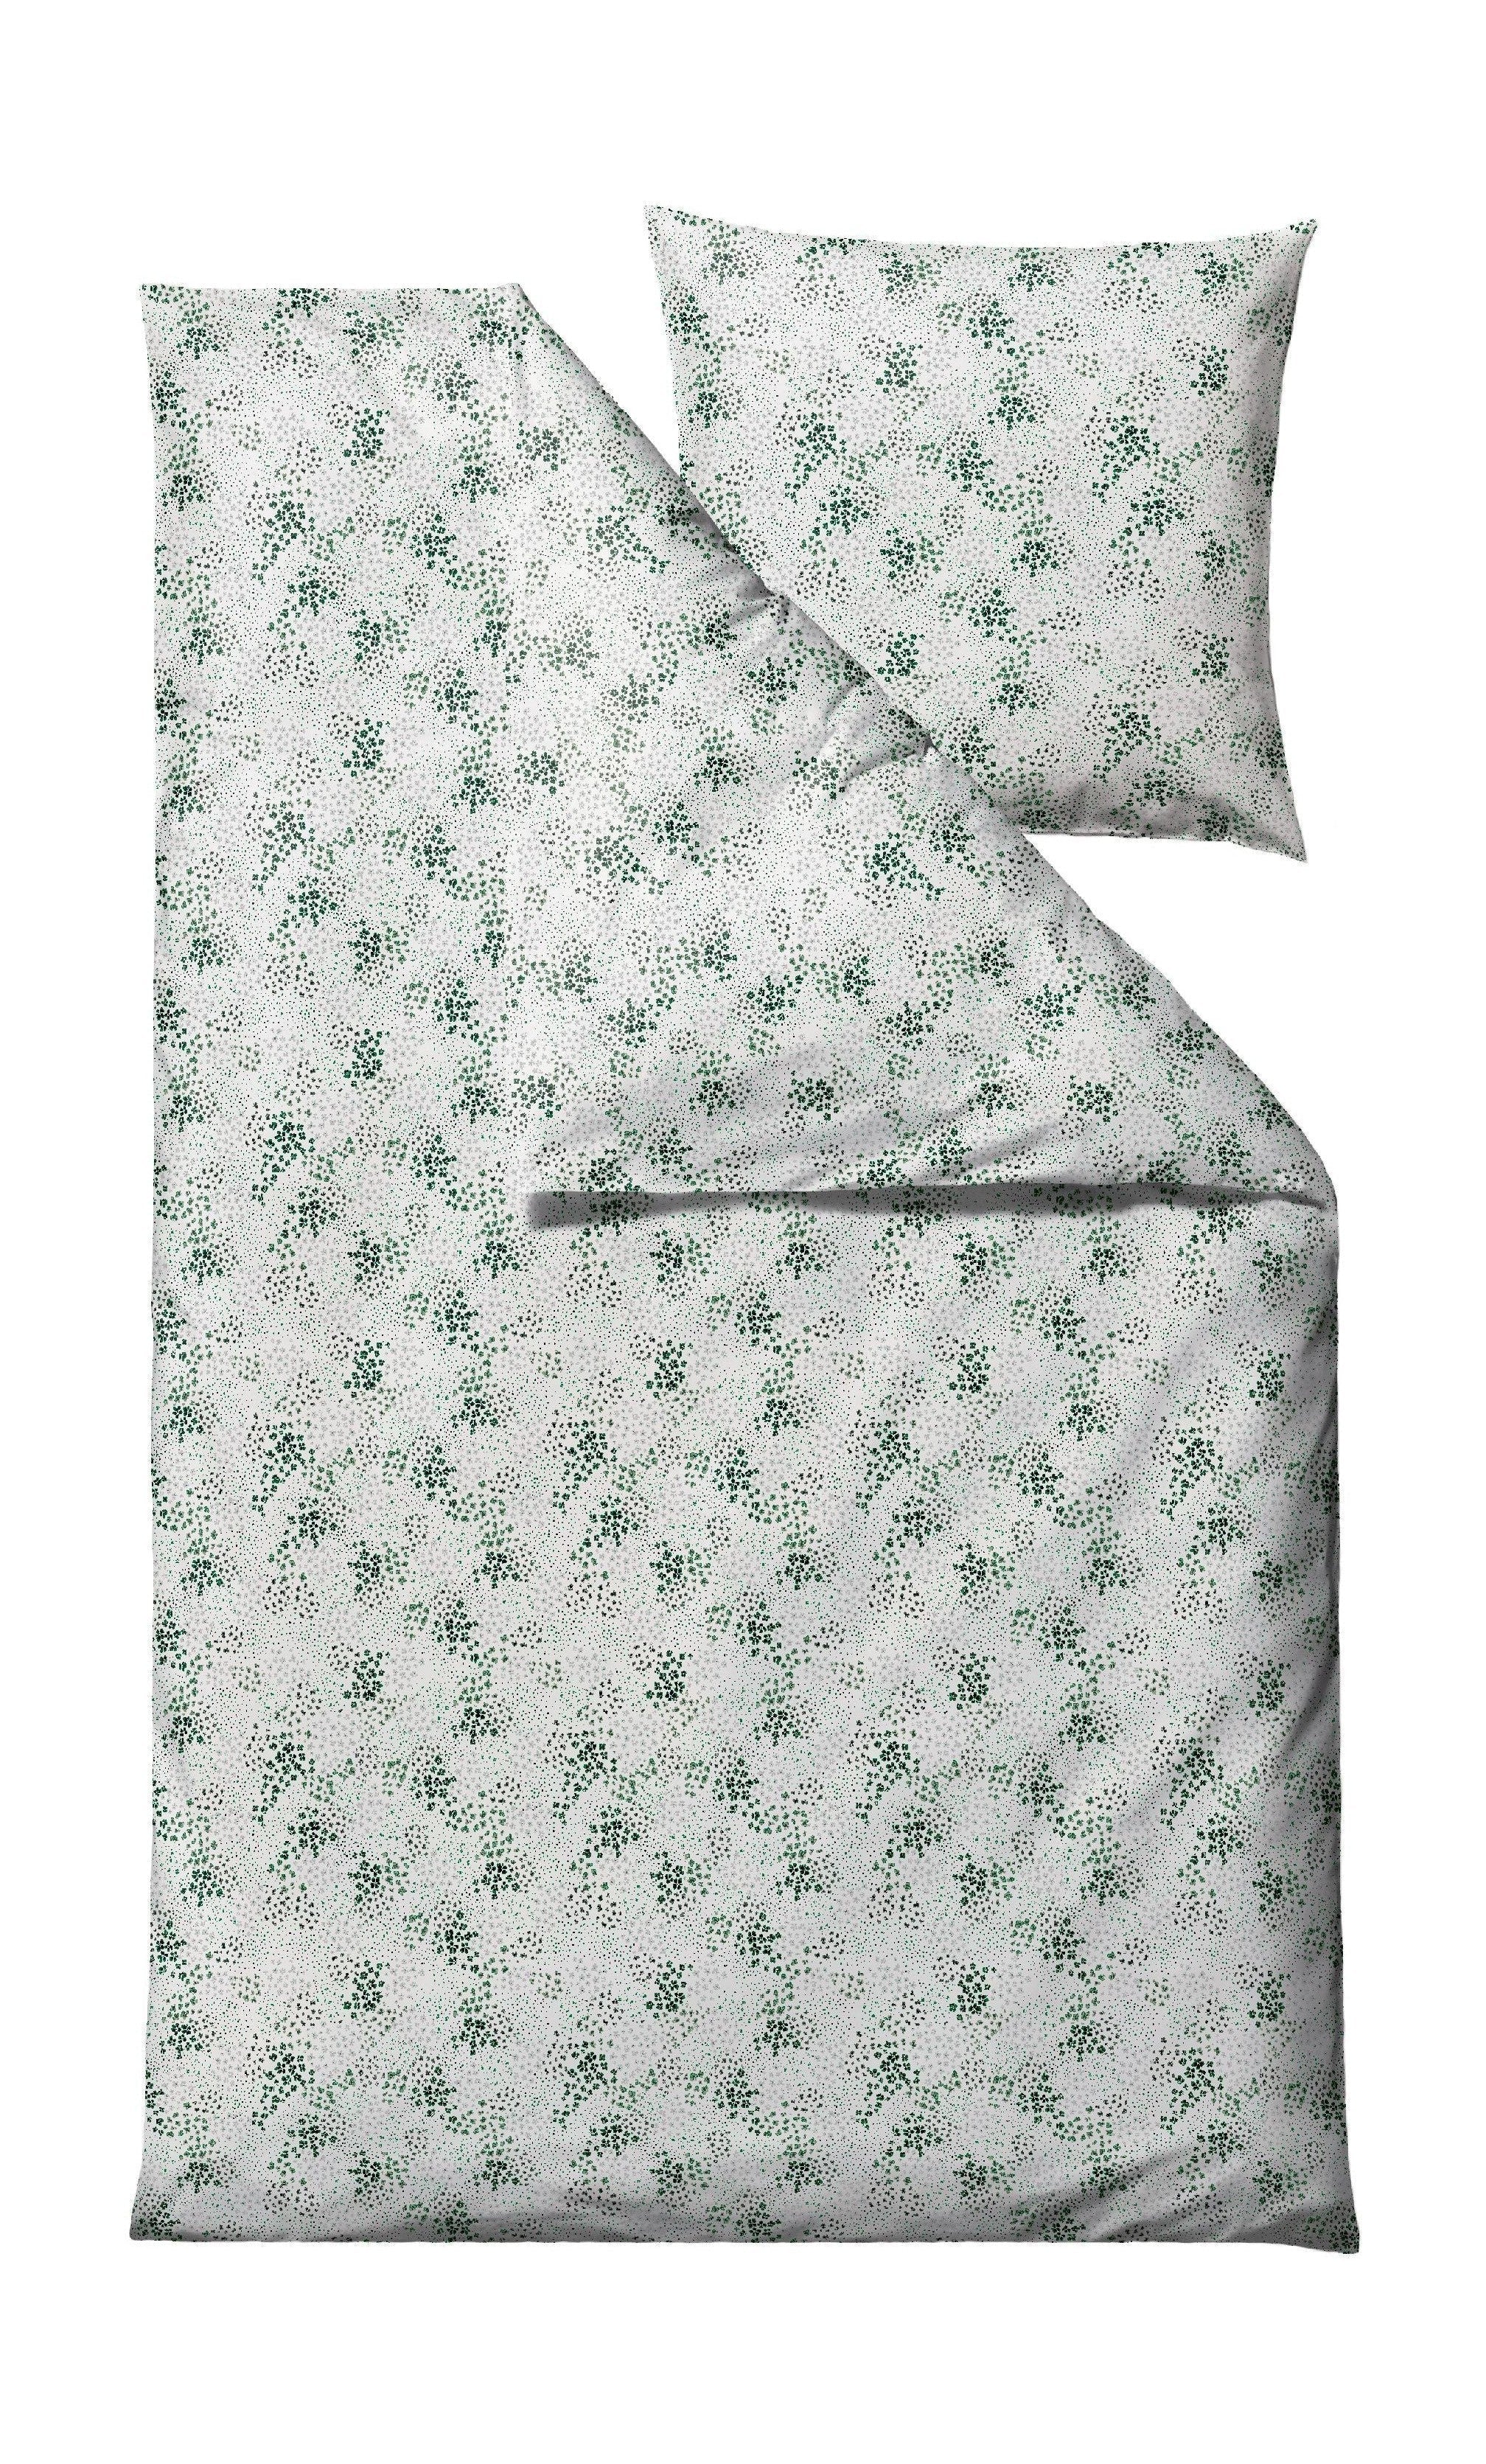 Lin lin de lit södahl alto 140 x 200 cm, vert